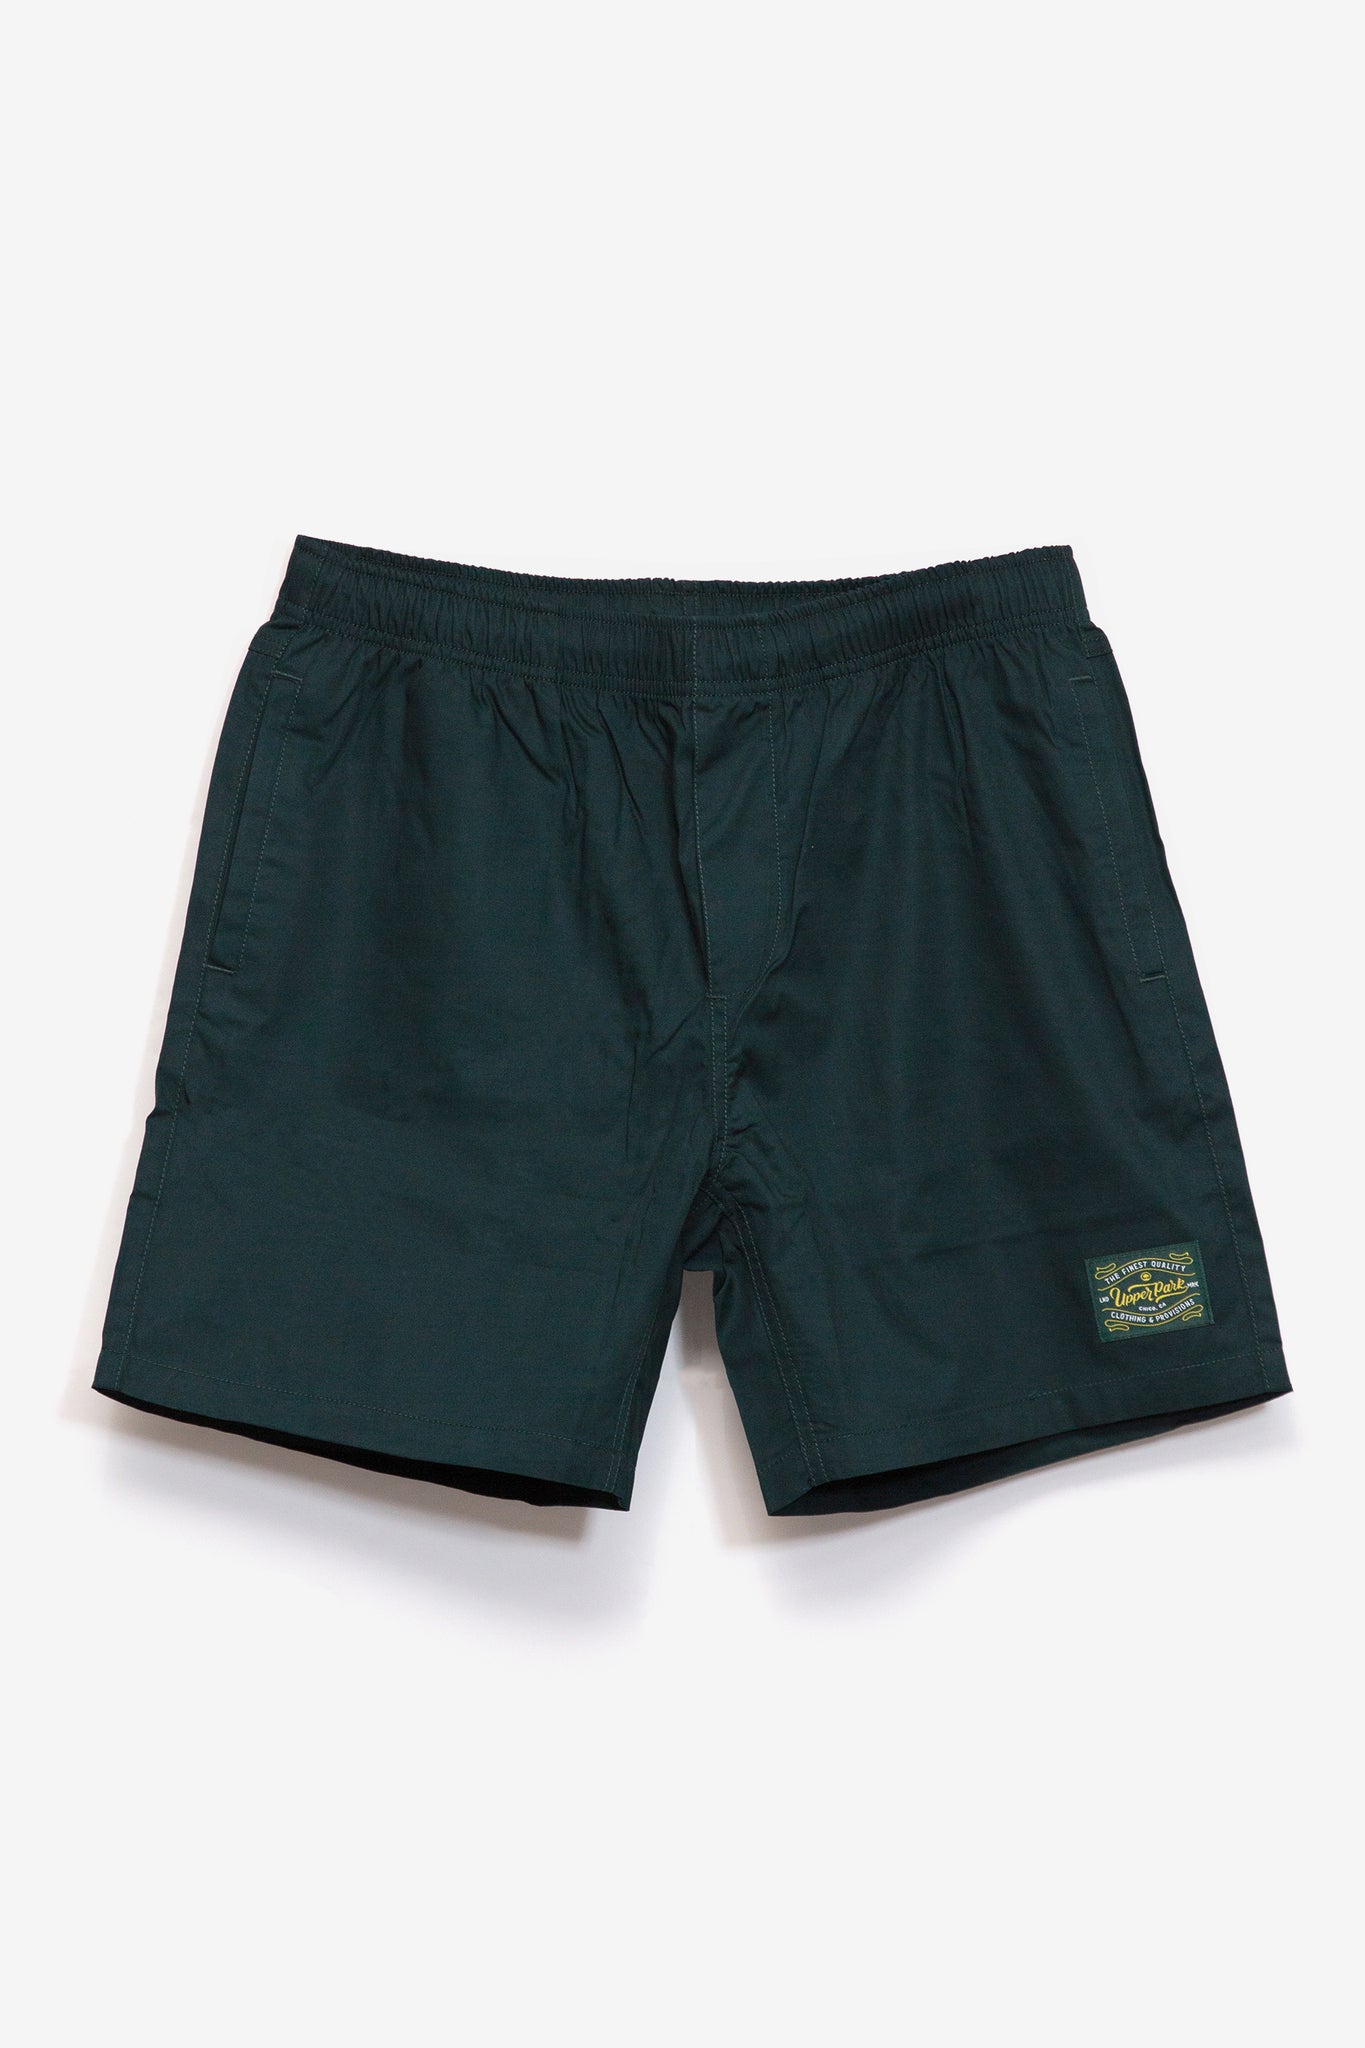 Beach Shorts & Pants for Women - Swim Shorts